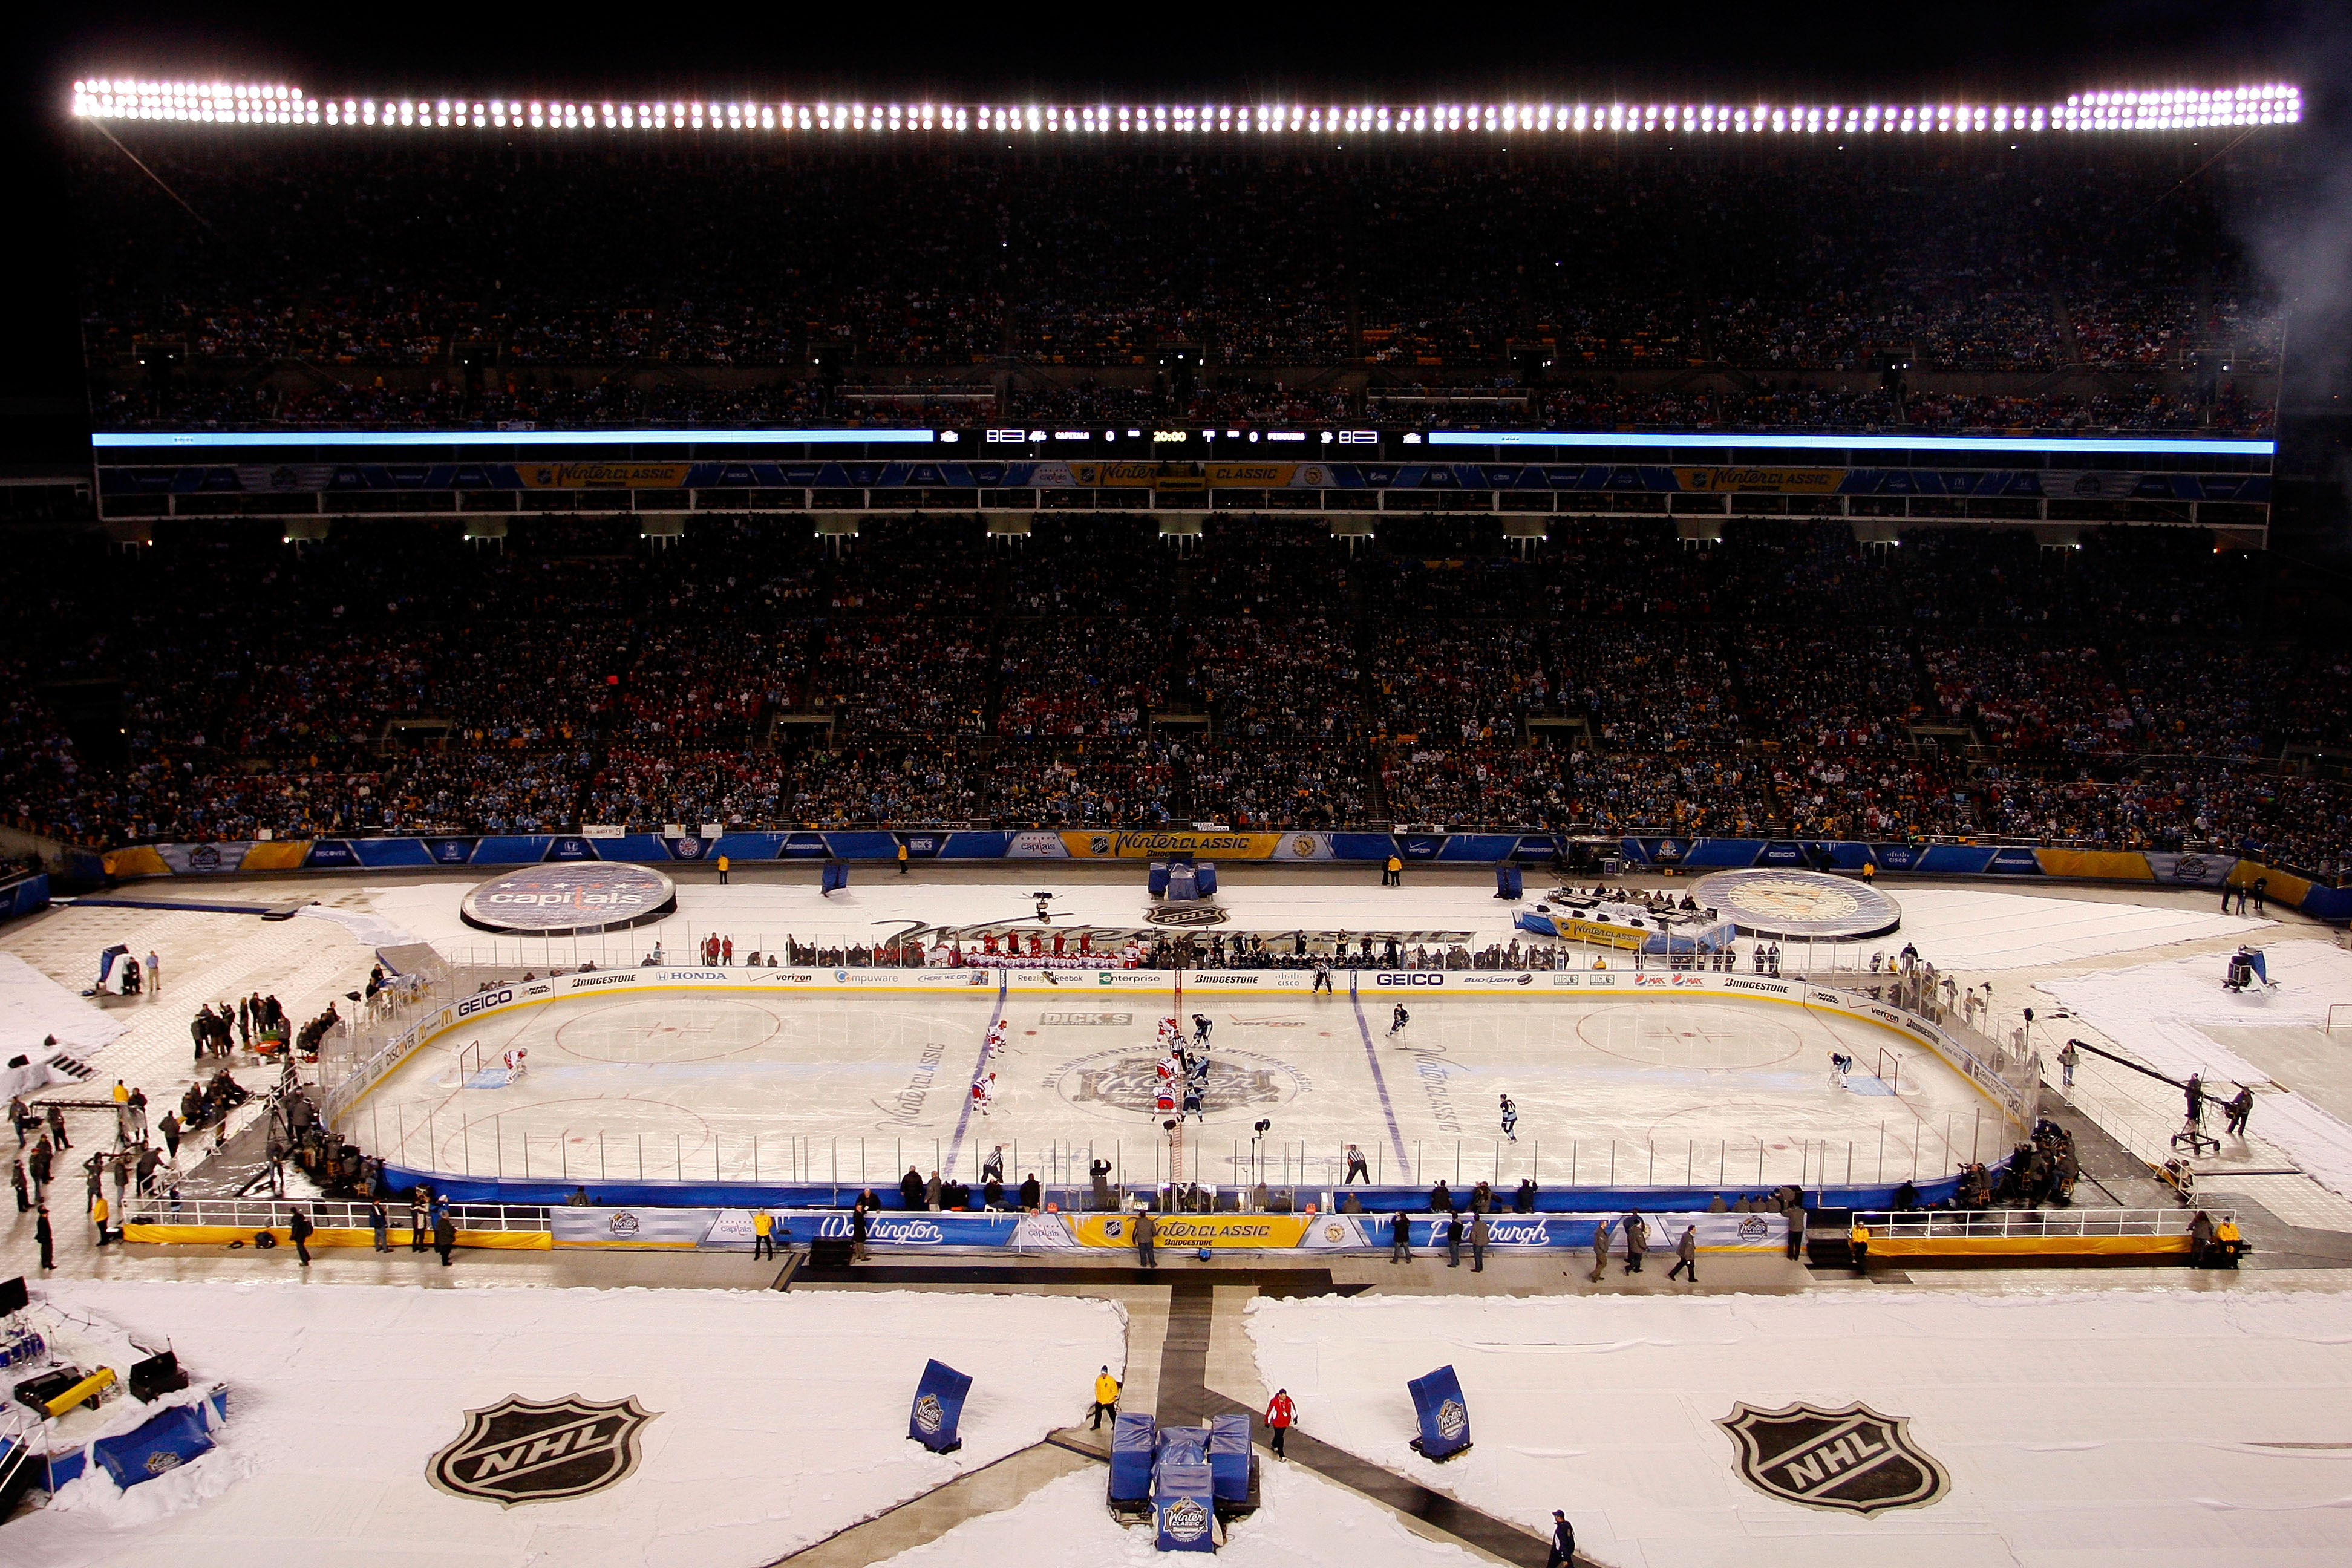 2011 NHL Winter Classic - Wikipedia